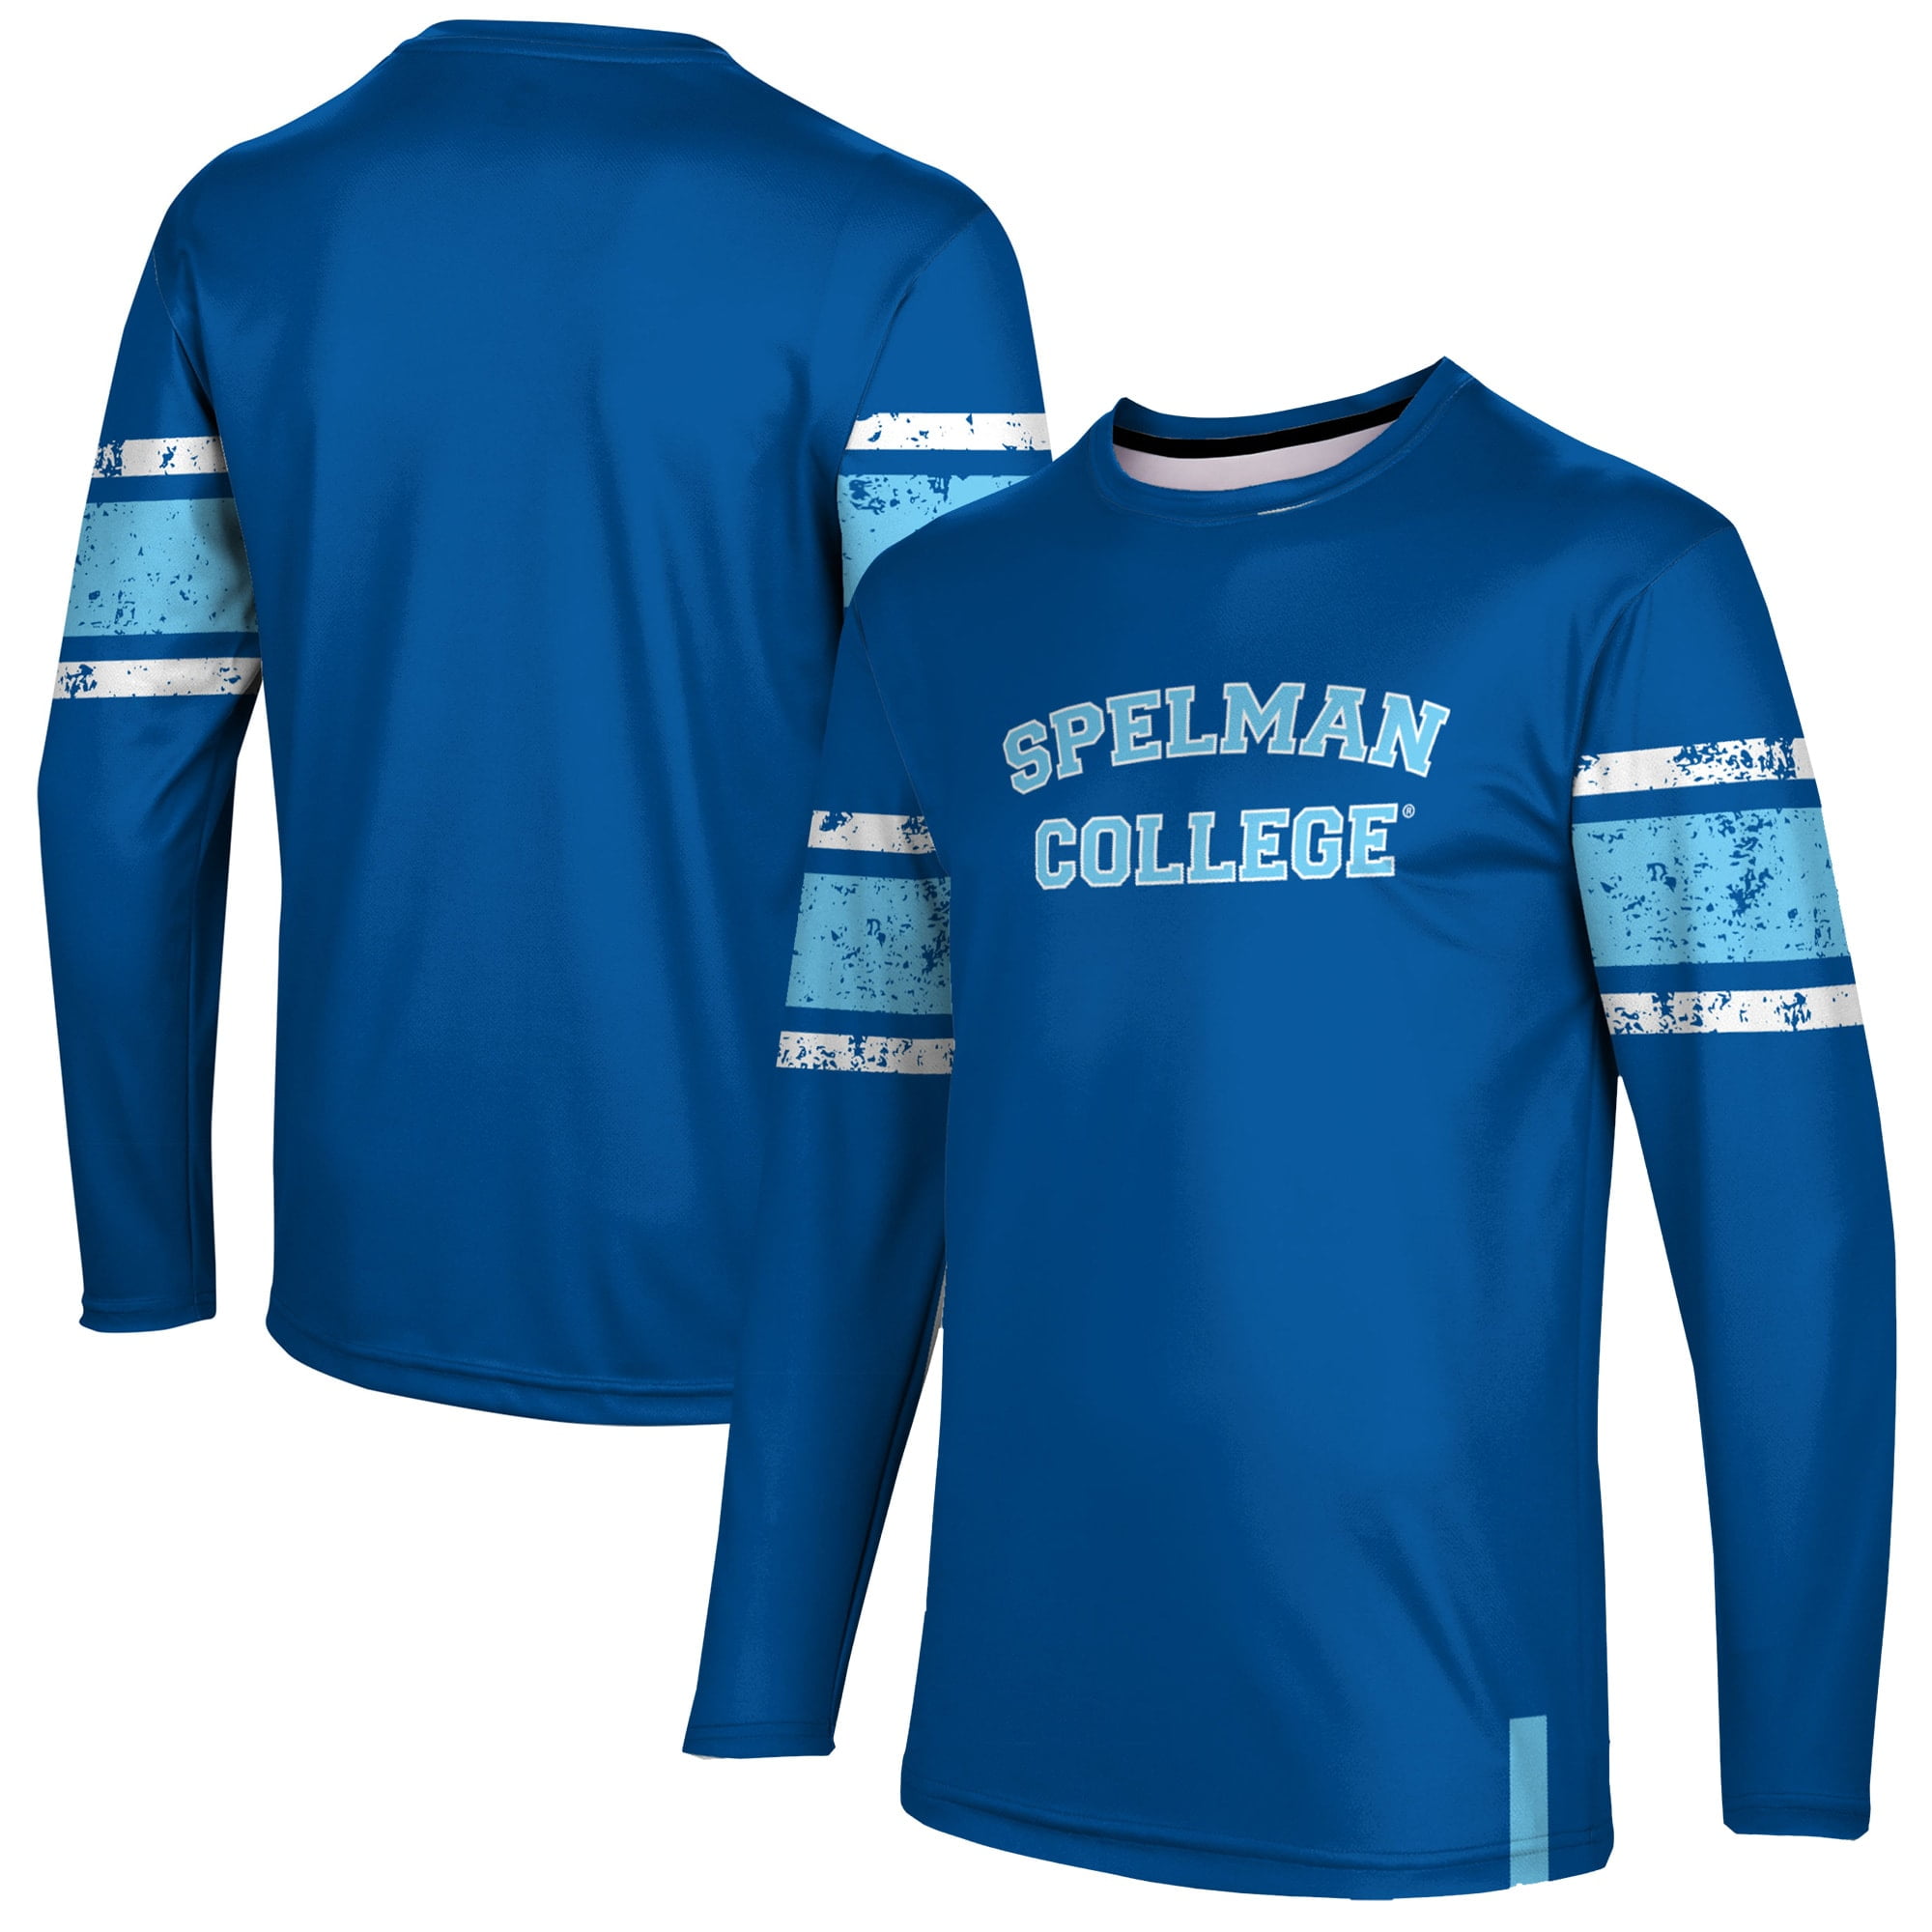 ProSphere Spelman College Mens Performance T-Shirt Ripple